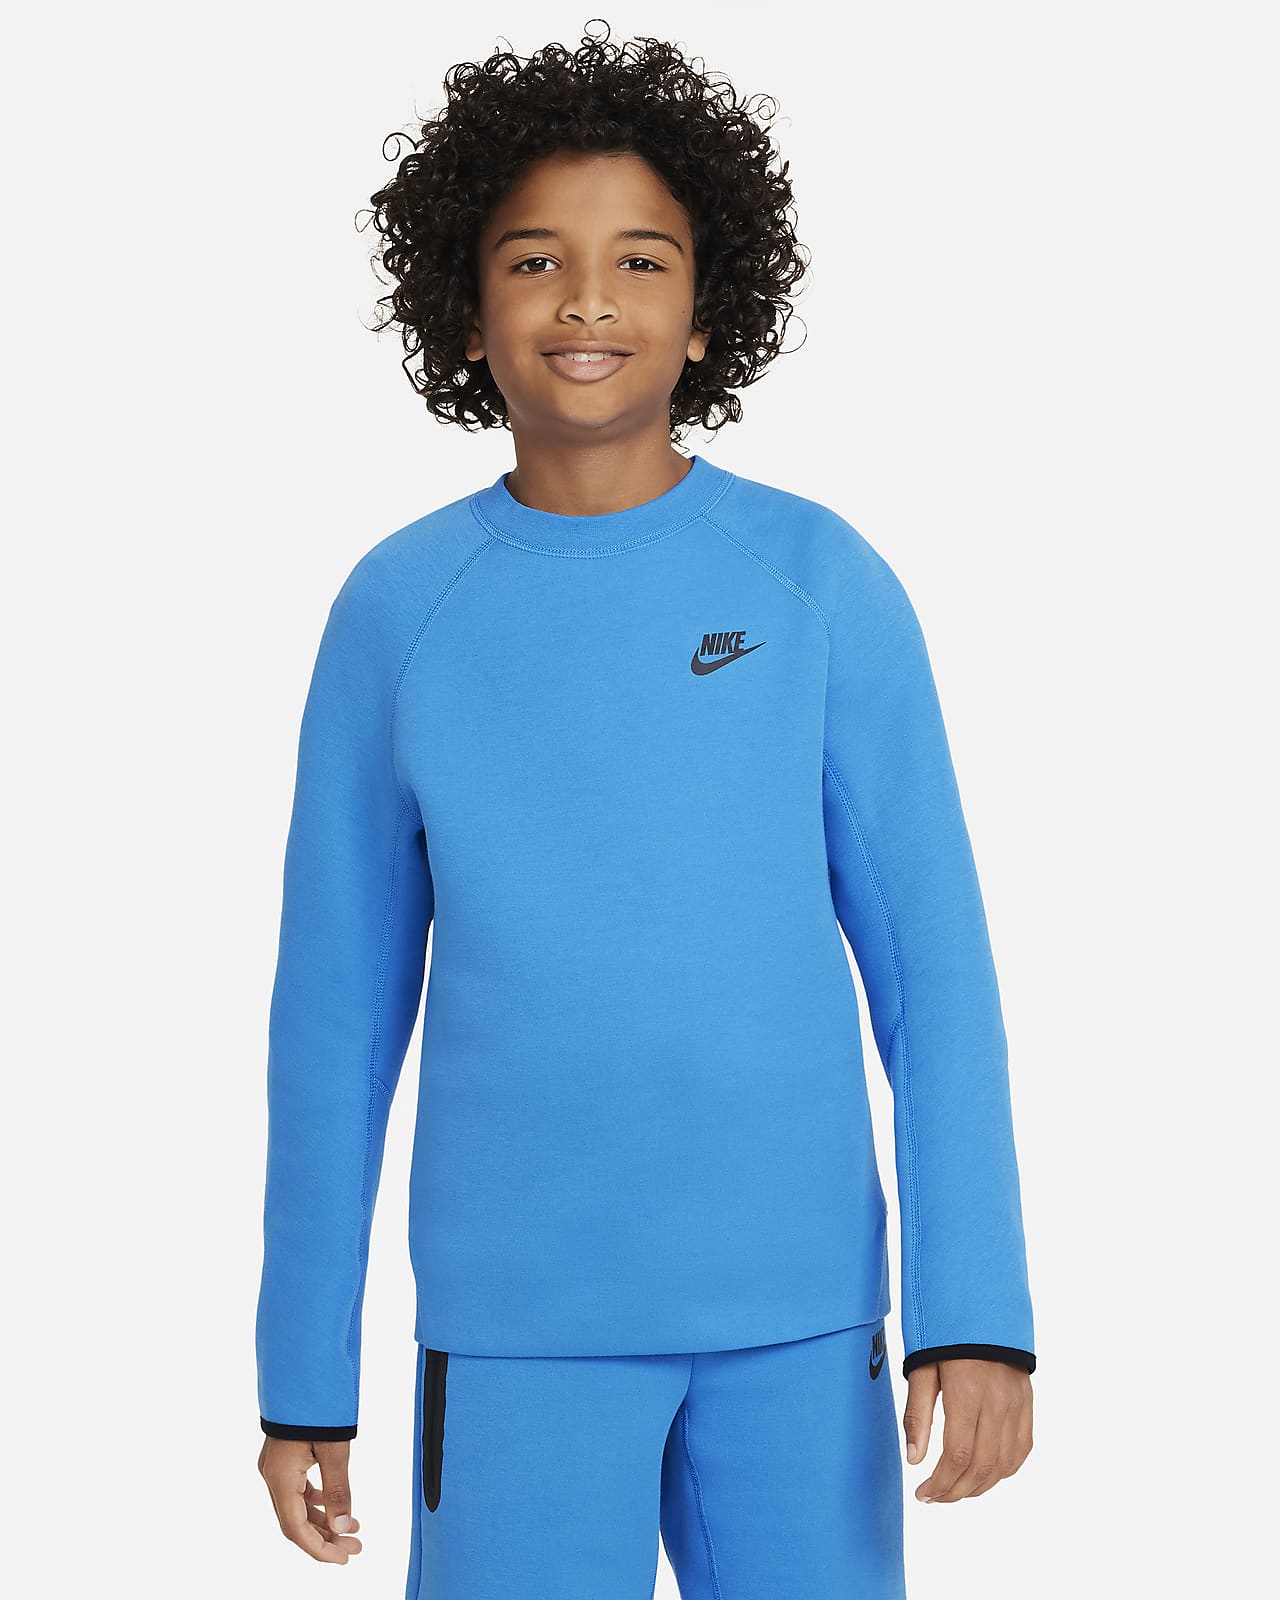 Sudadera para niño talla grande Nike Sportswear Tech Fleece